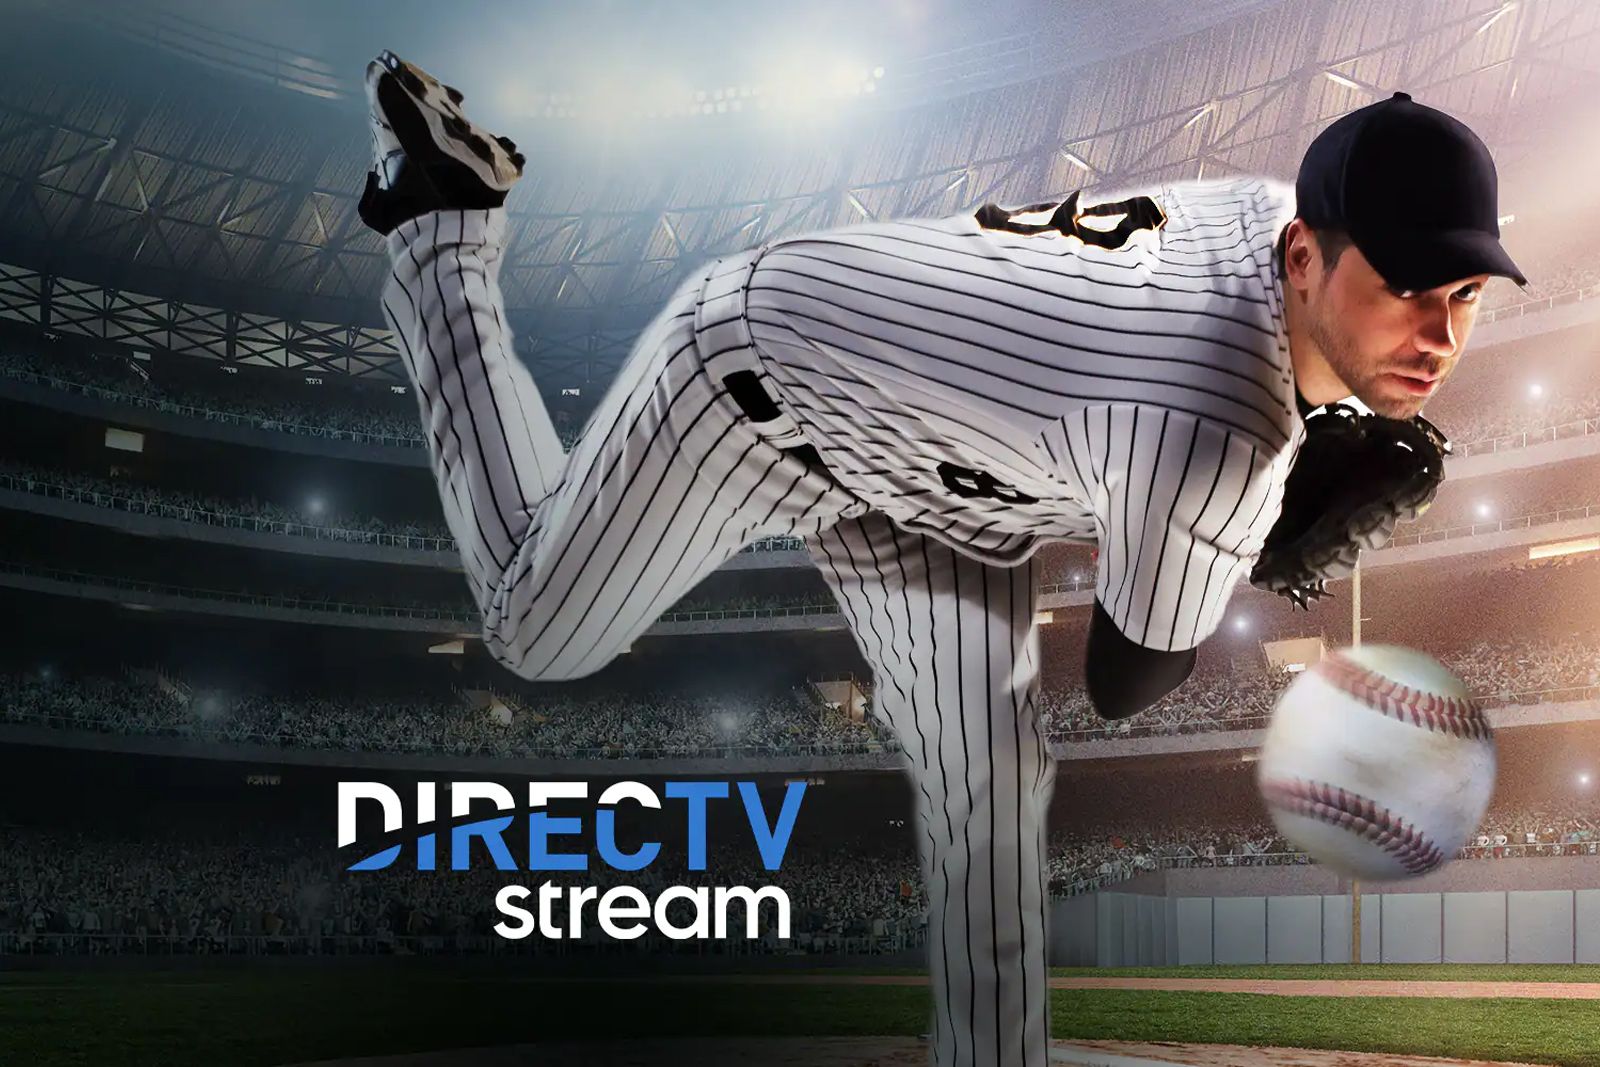 baseball game on directv